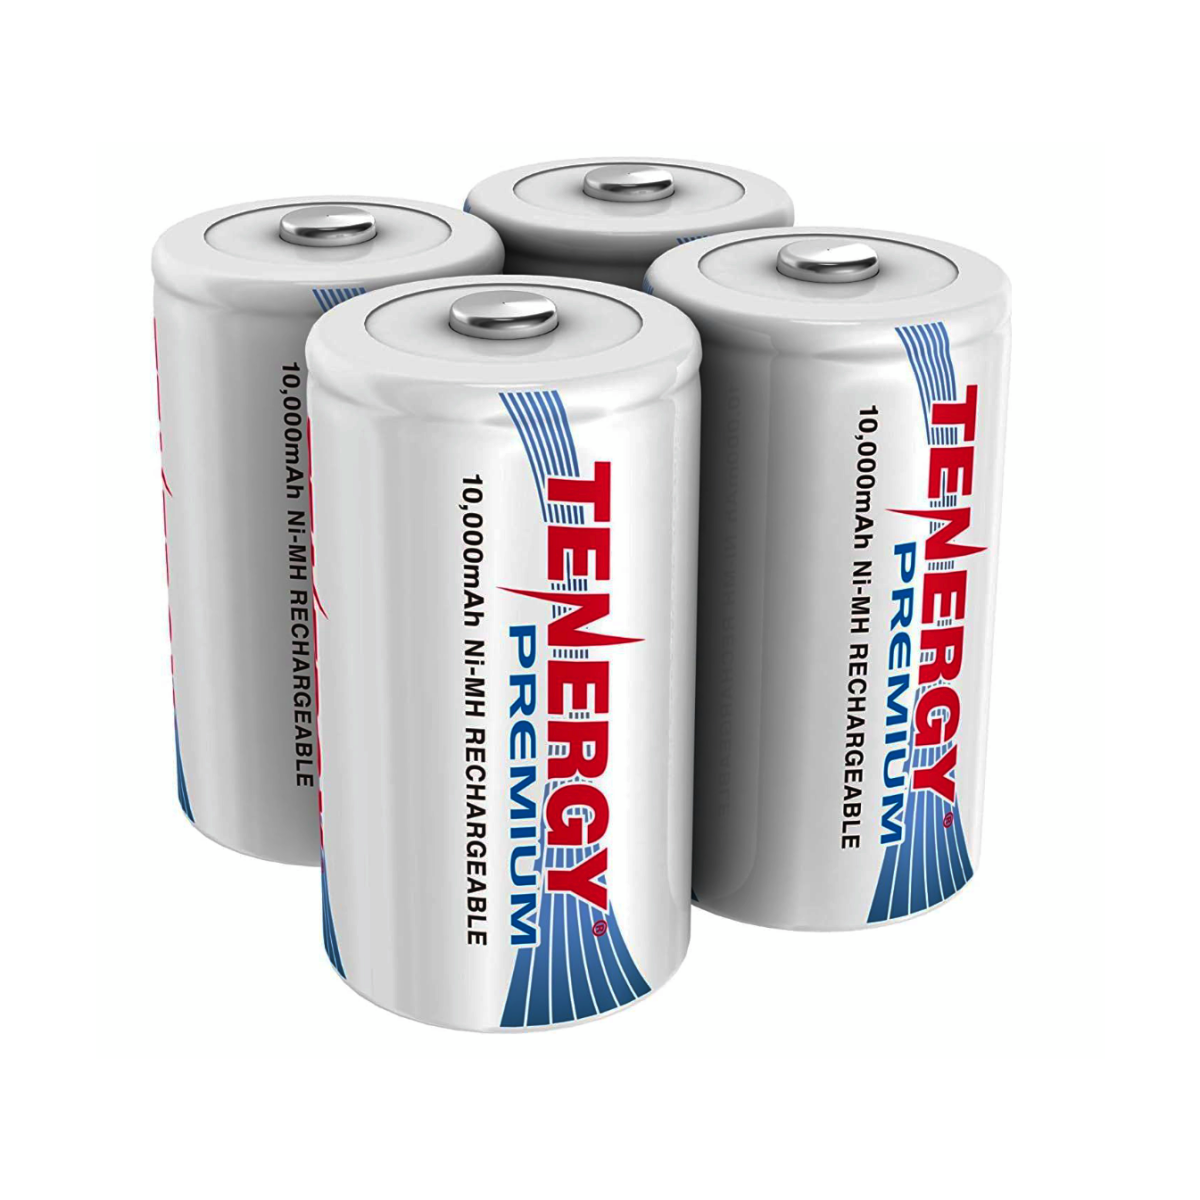 Four Tenergy Premium D batteries